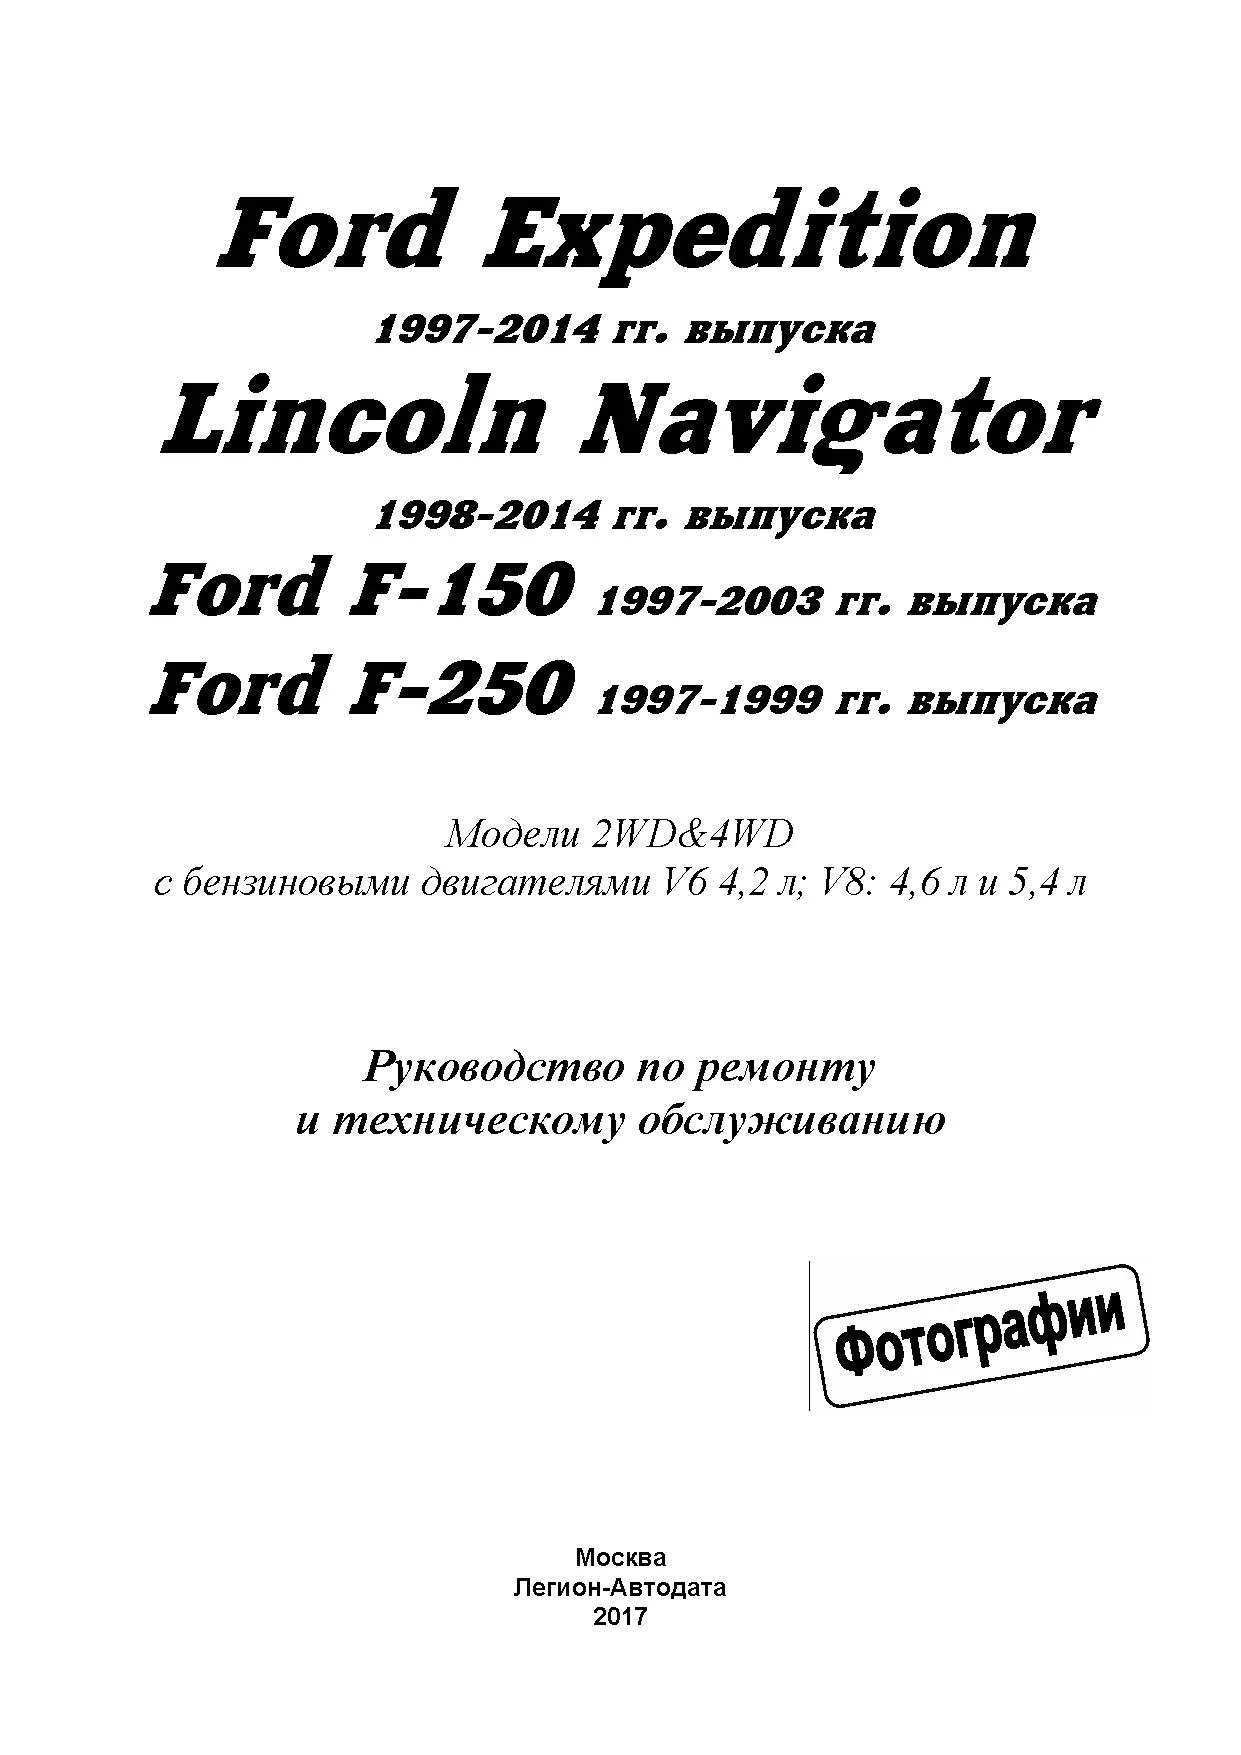 Книга Ford Expedition 1997-2014, Lincoln Navigator 1998-2014, Ford F150, F250 1997-2003 бензин, ч/б фото, электросхемы. Руководство по ремонту и эксплуатации автомобиля. Легион-Автодата